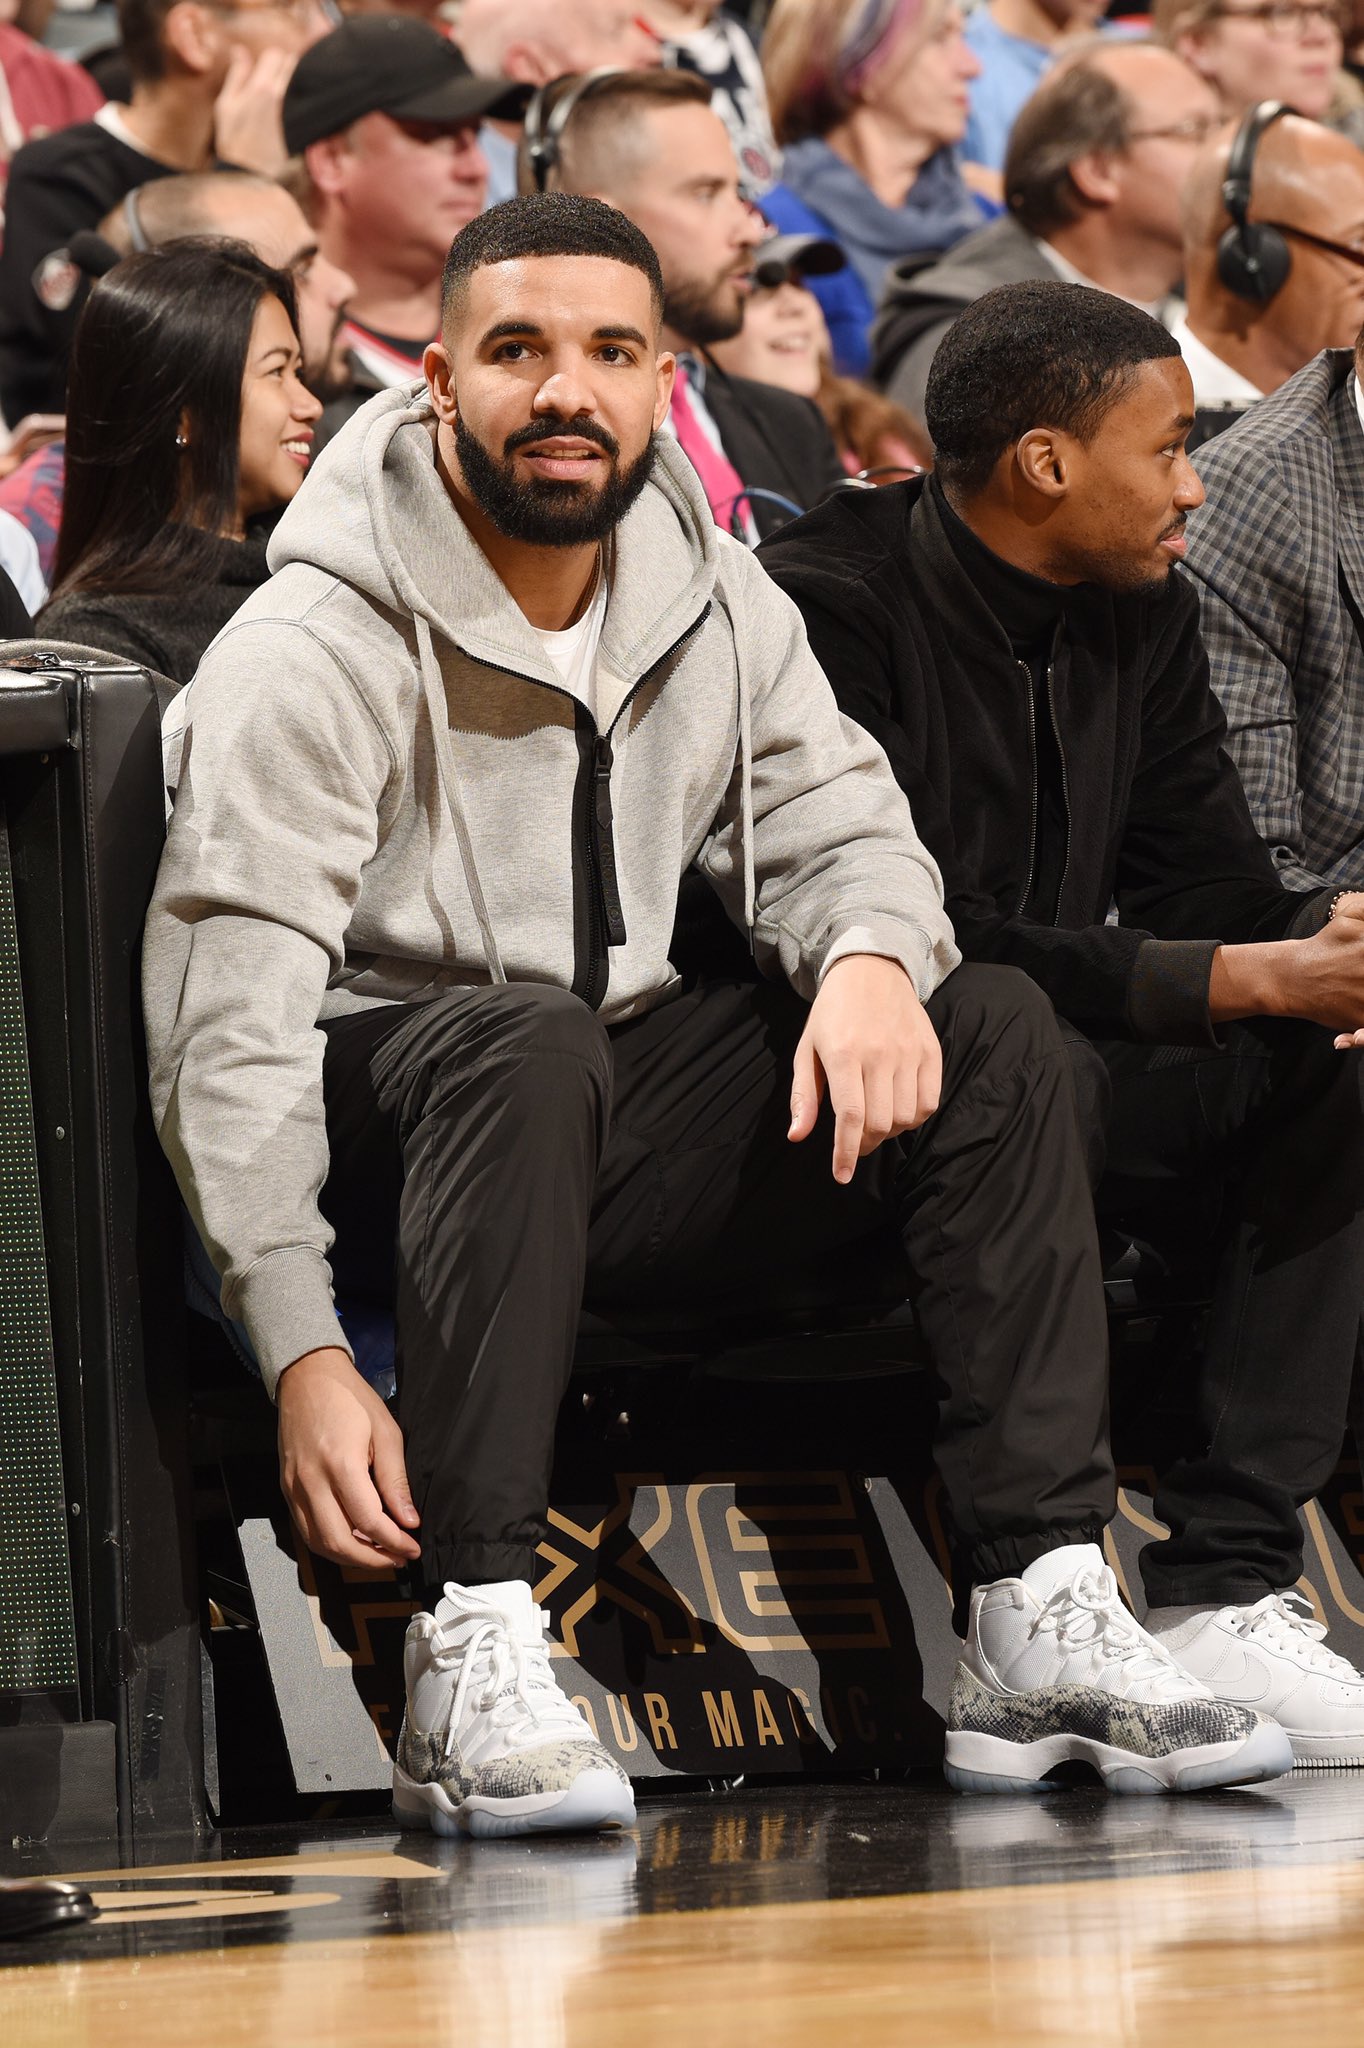 B/R Kicks on X: ".@Drake in attendance for the @Raptors game